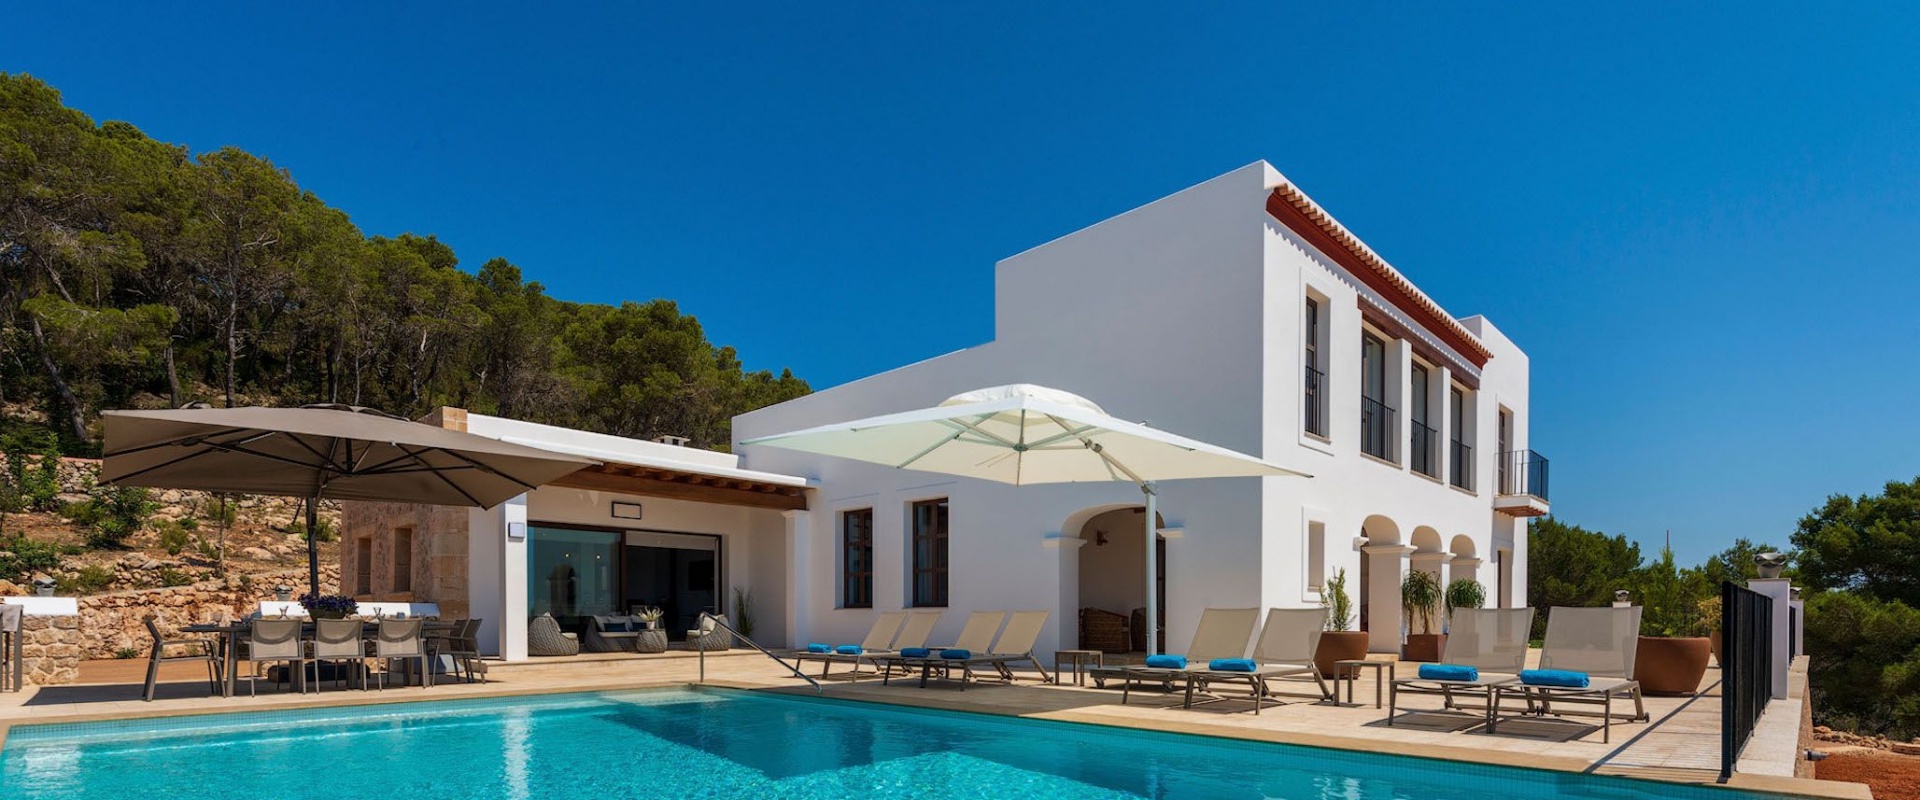 Celestial Villa Ibiza, near Santa Eularia in Ibiza, family villa in Ibiza